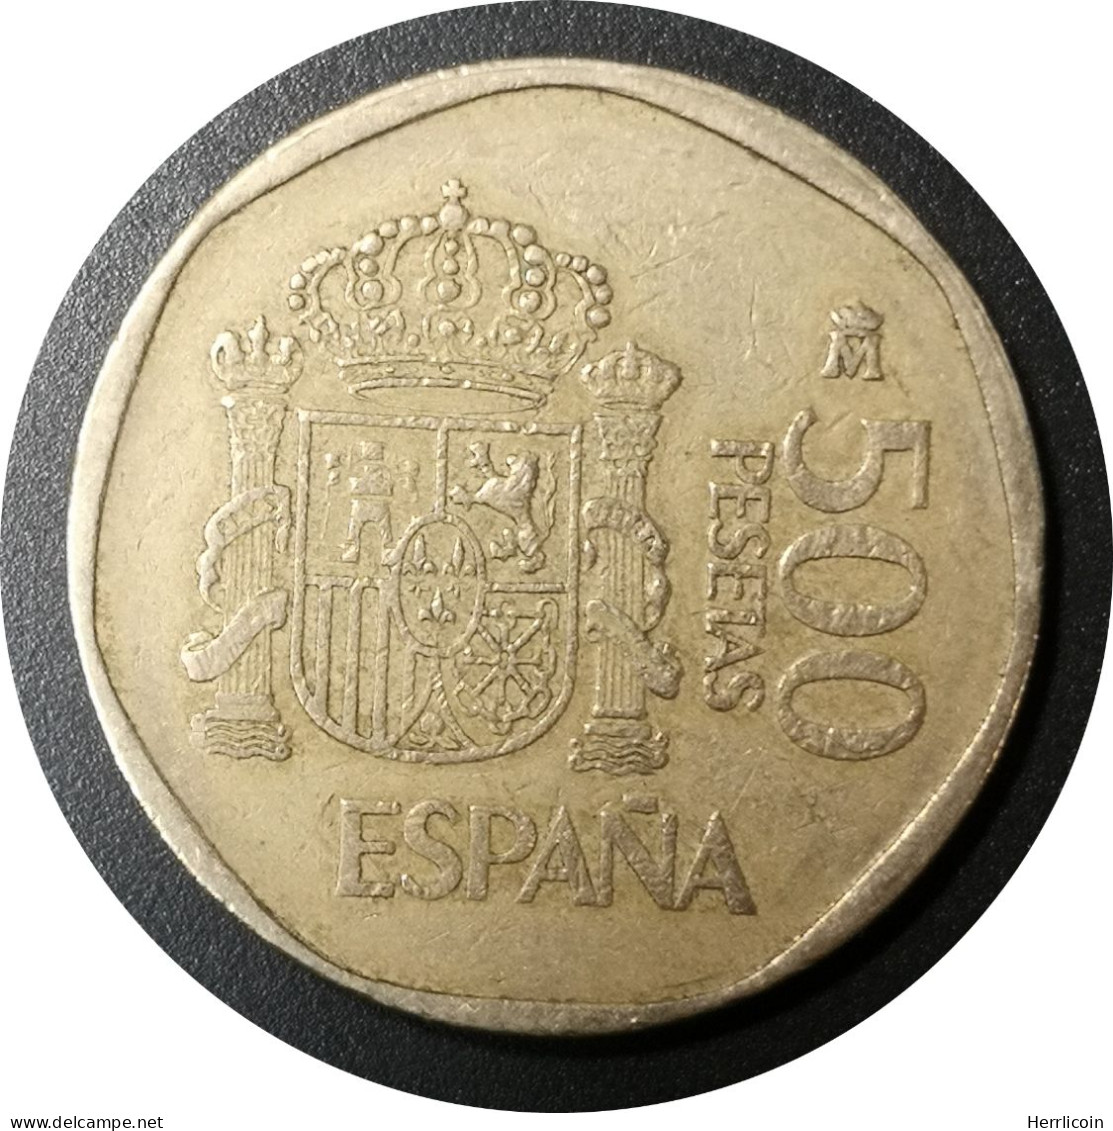 Monnaie Espagne - 1988 - 500 Pesetas Juan Carlos I - 500 Peseta